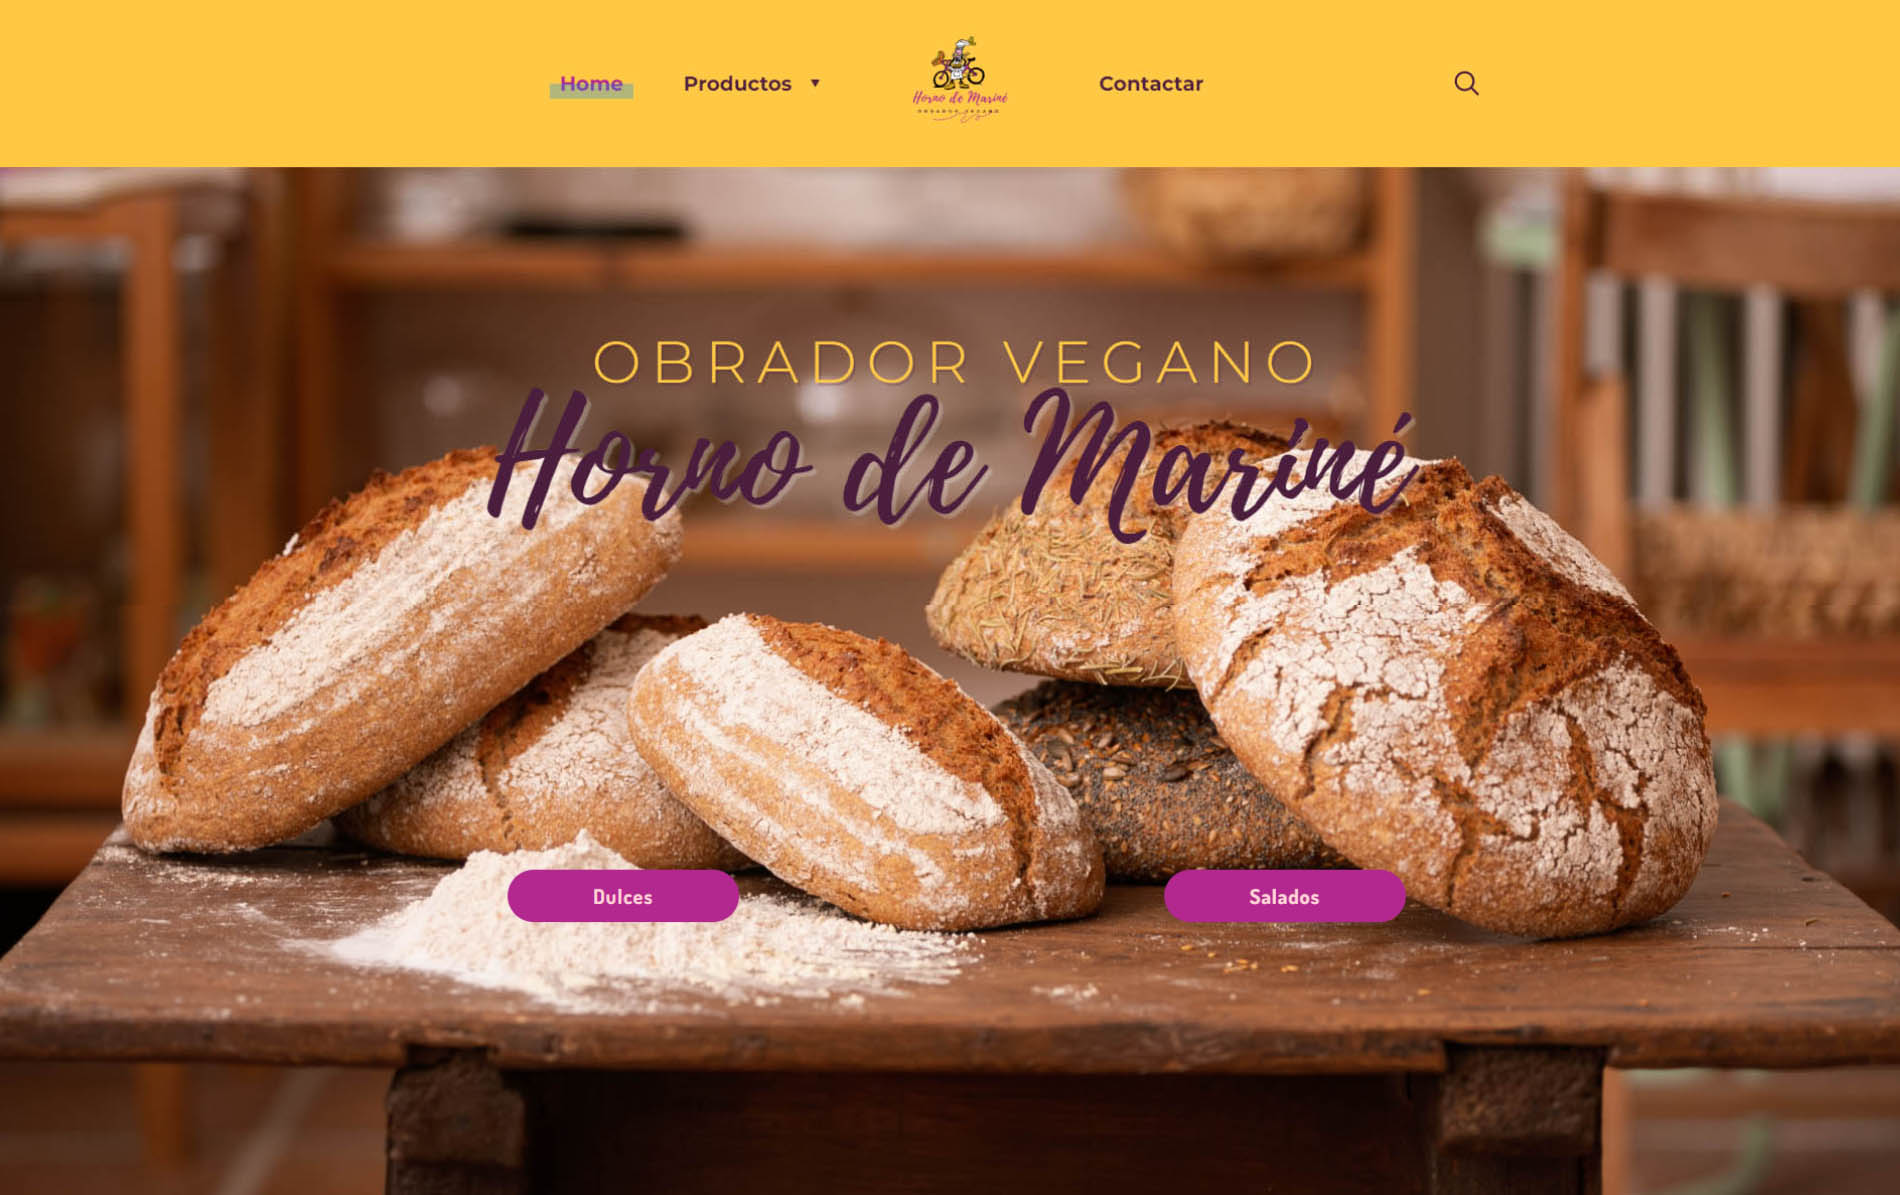 Website: Horno de Mariné